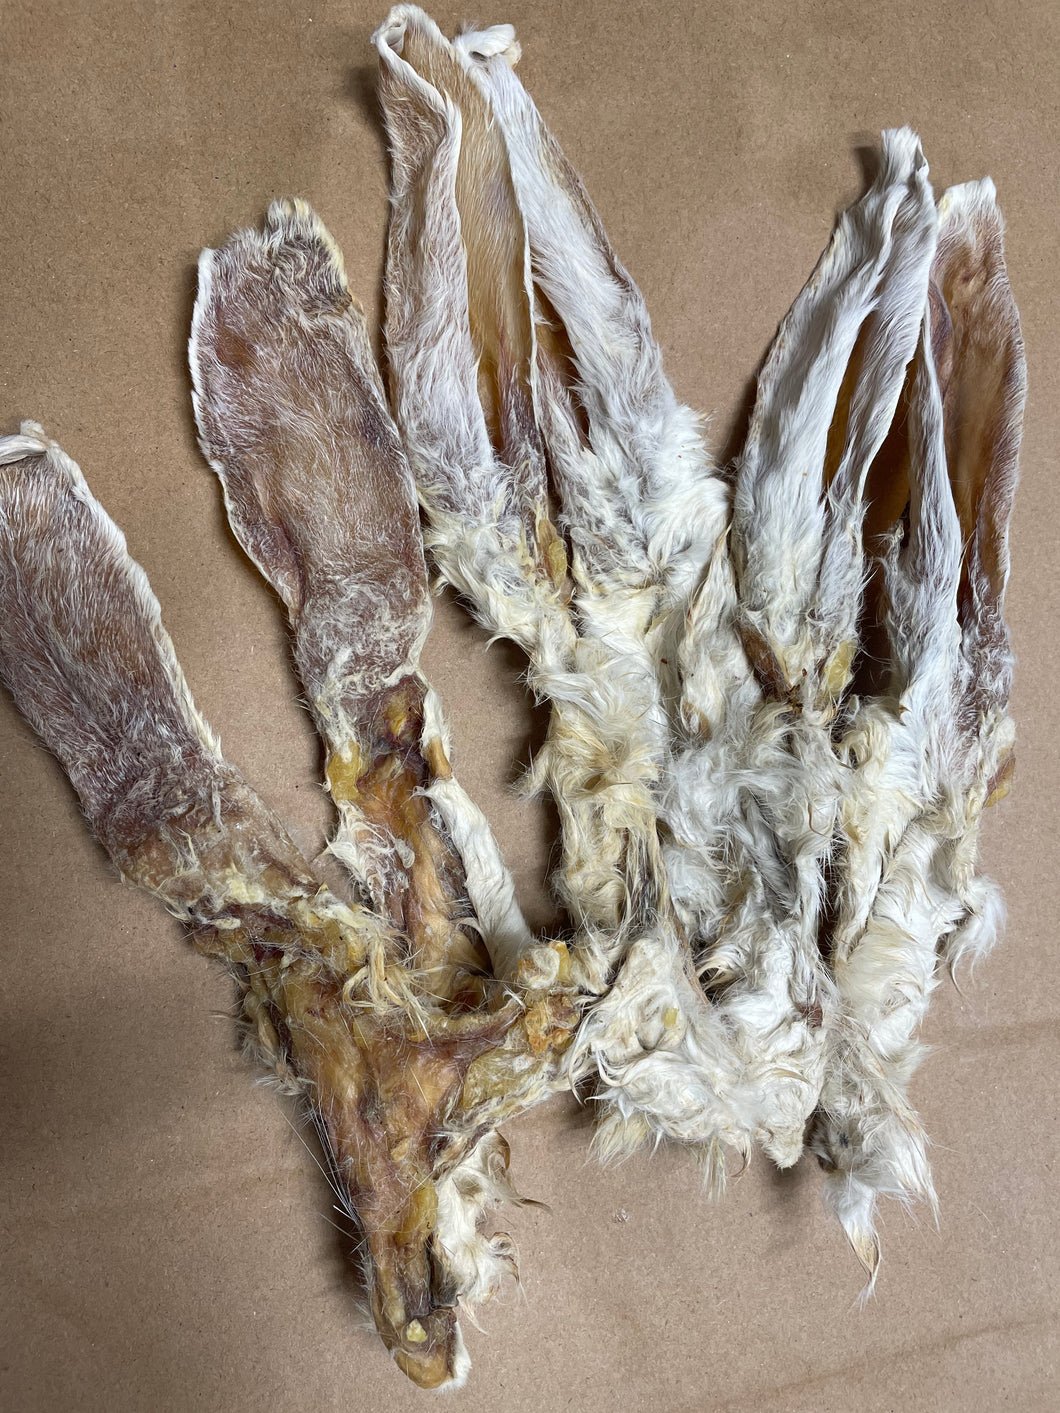 Rabbit Ears - Dried (with fur).